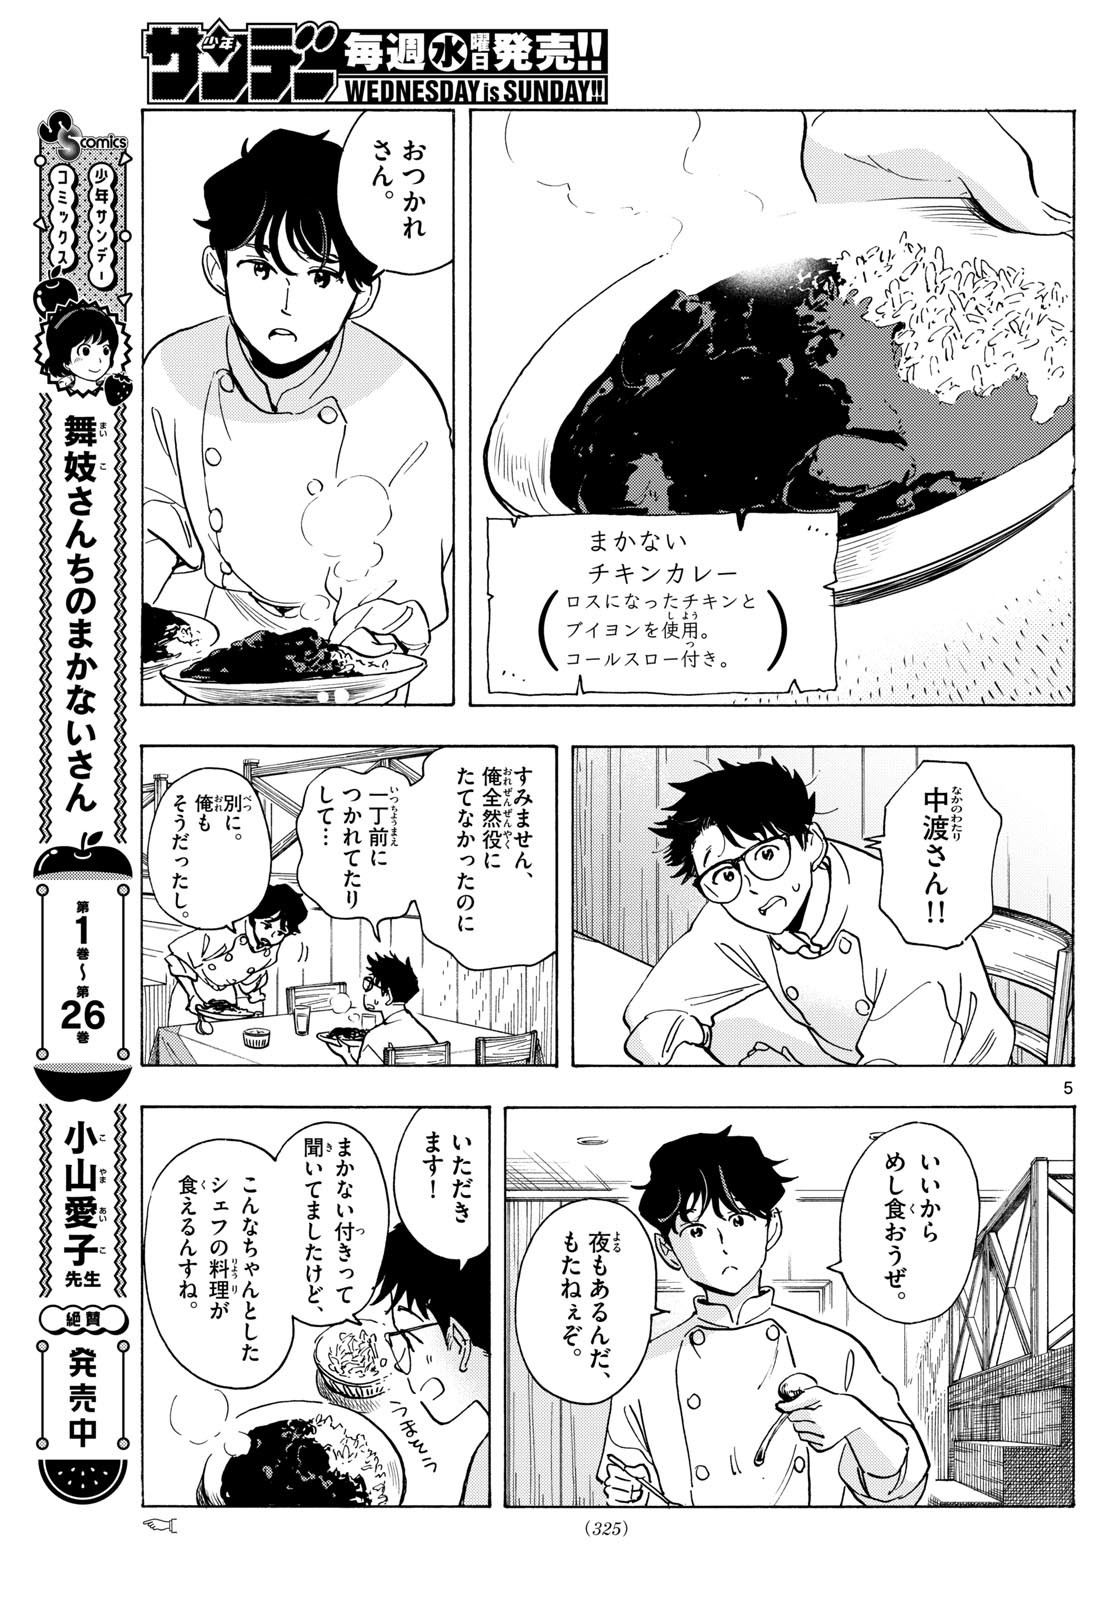 Maiko-san Chi no Makanai-san - Chapter 308 - Page 5